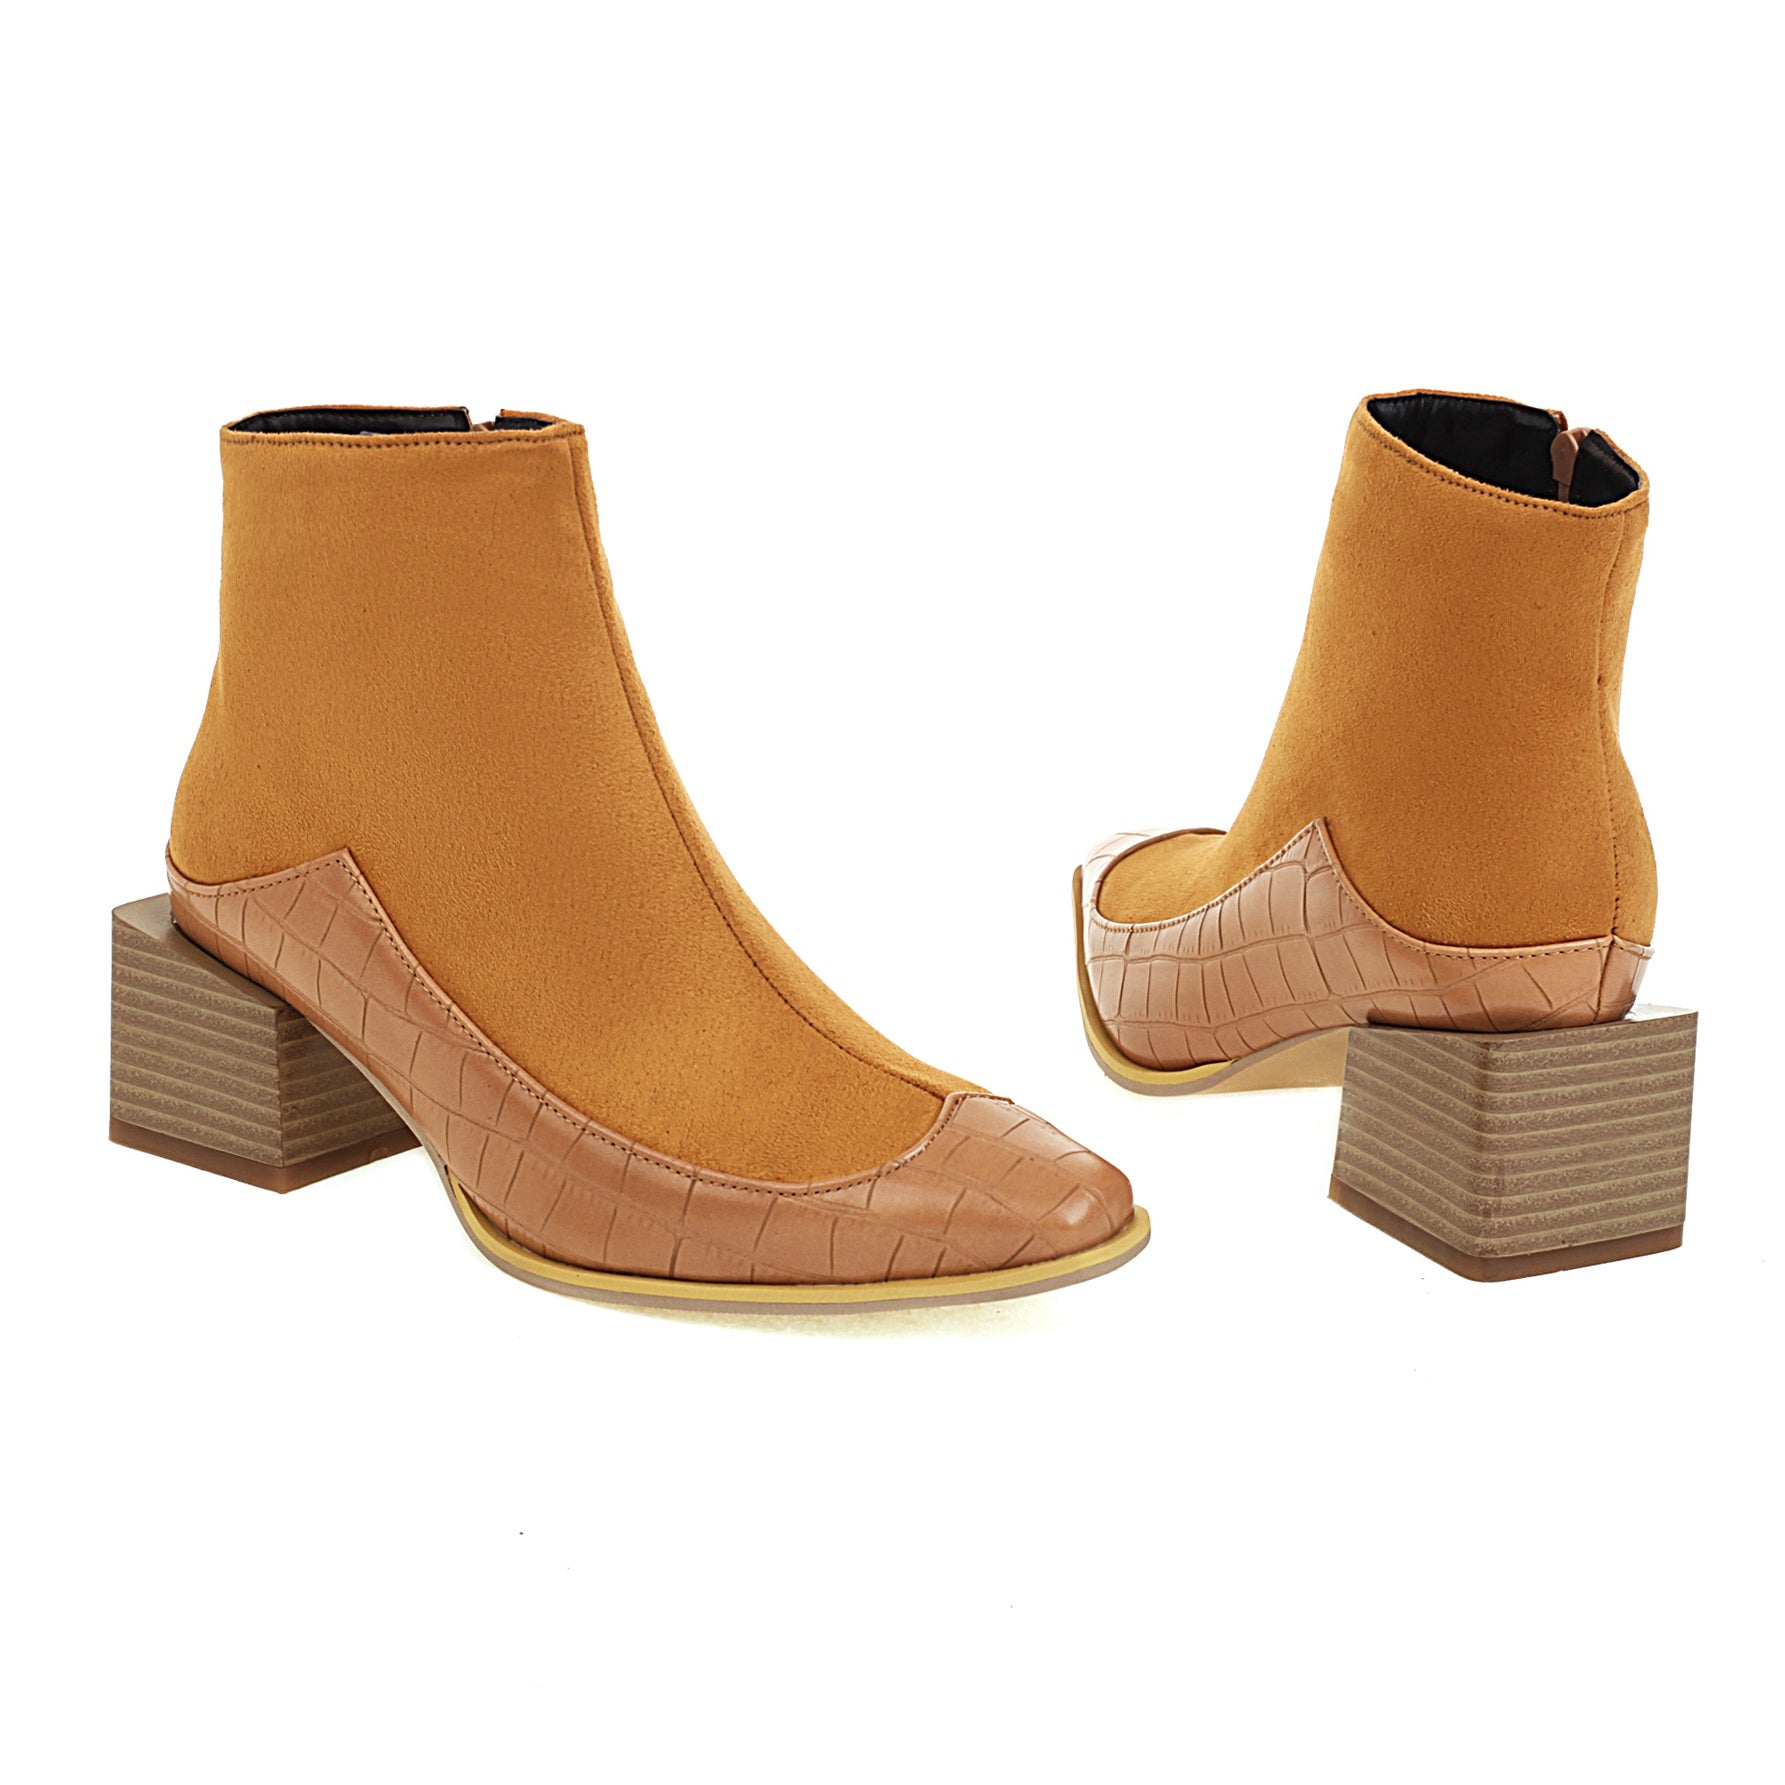 Bigsizeheels Stone pattern profiled heel ankle boots - Yellow freeshipping - bigsizeheel®-size5-size15 -All Plus Sizes Available!